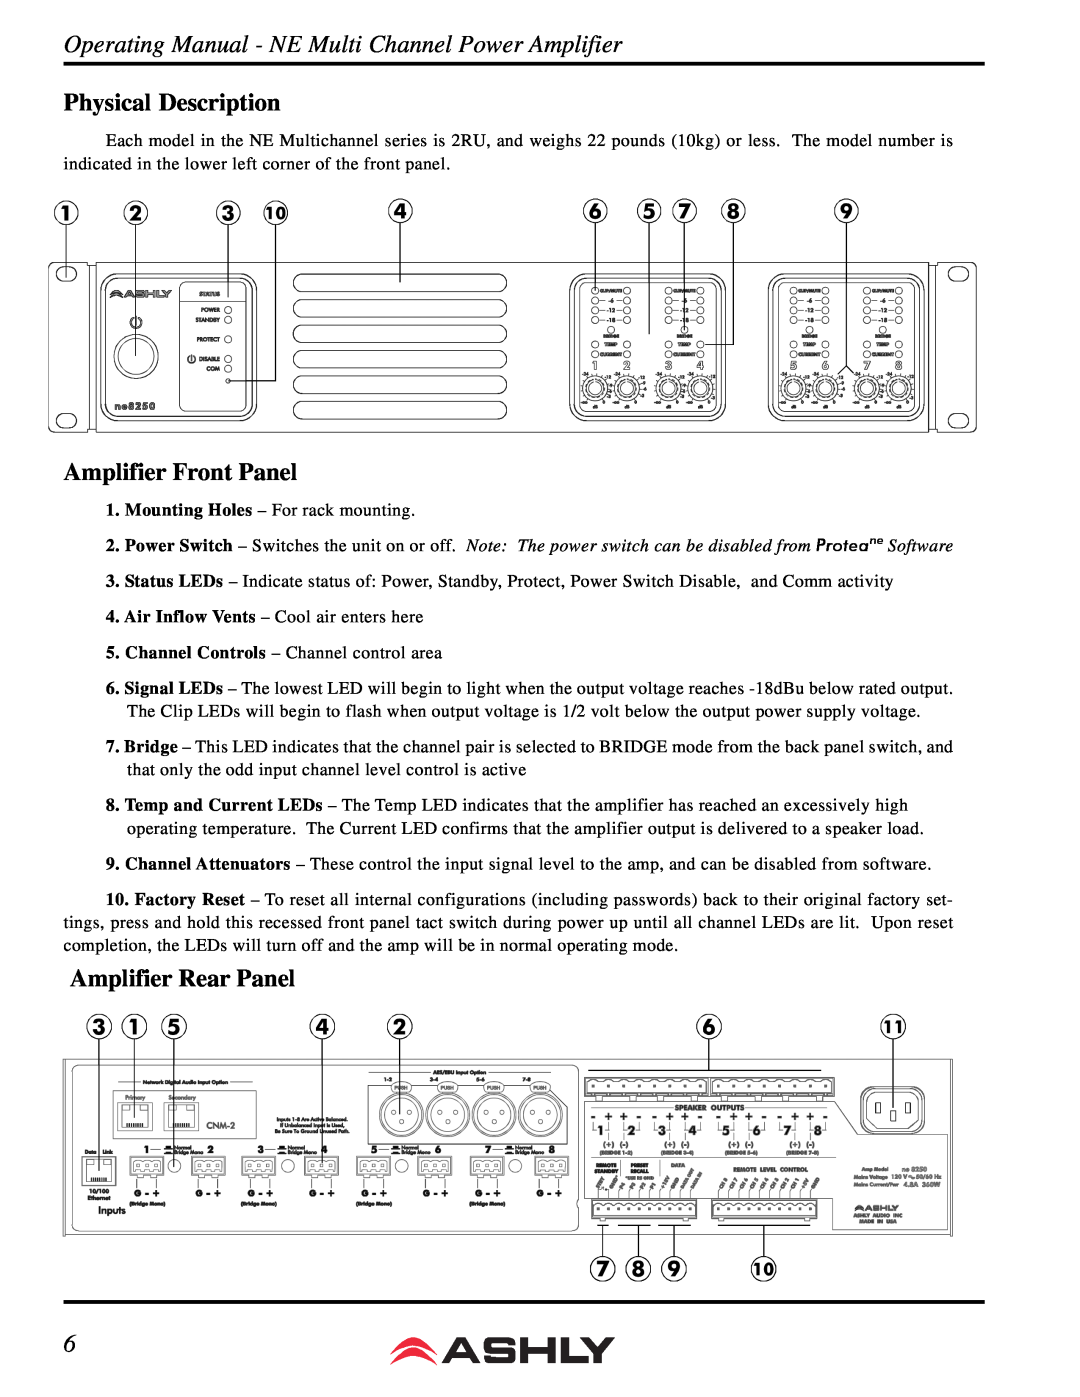 Ashly NE 4200.25 manual Physical Description, Amplifier Front Panel, Amplifier Rear Panel 